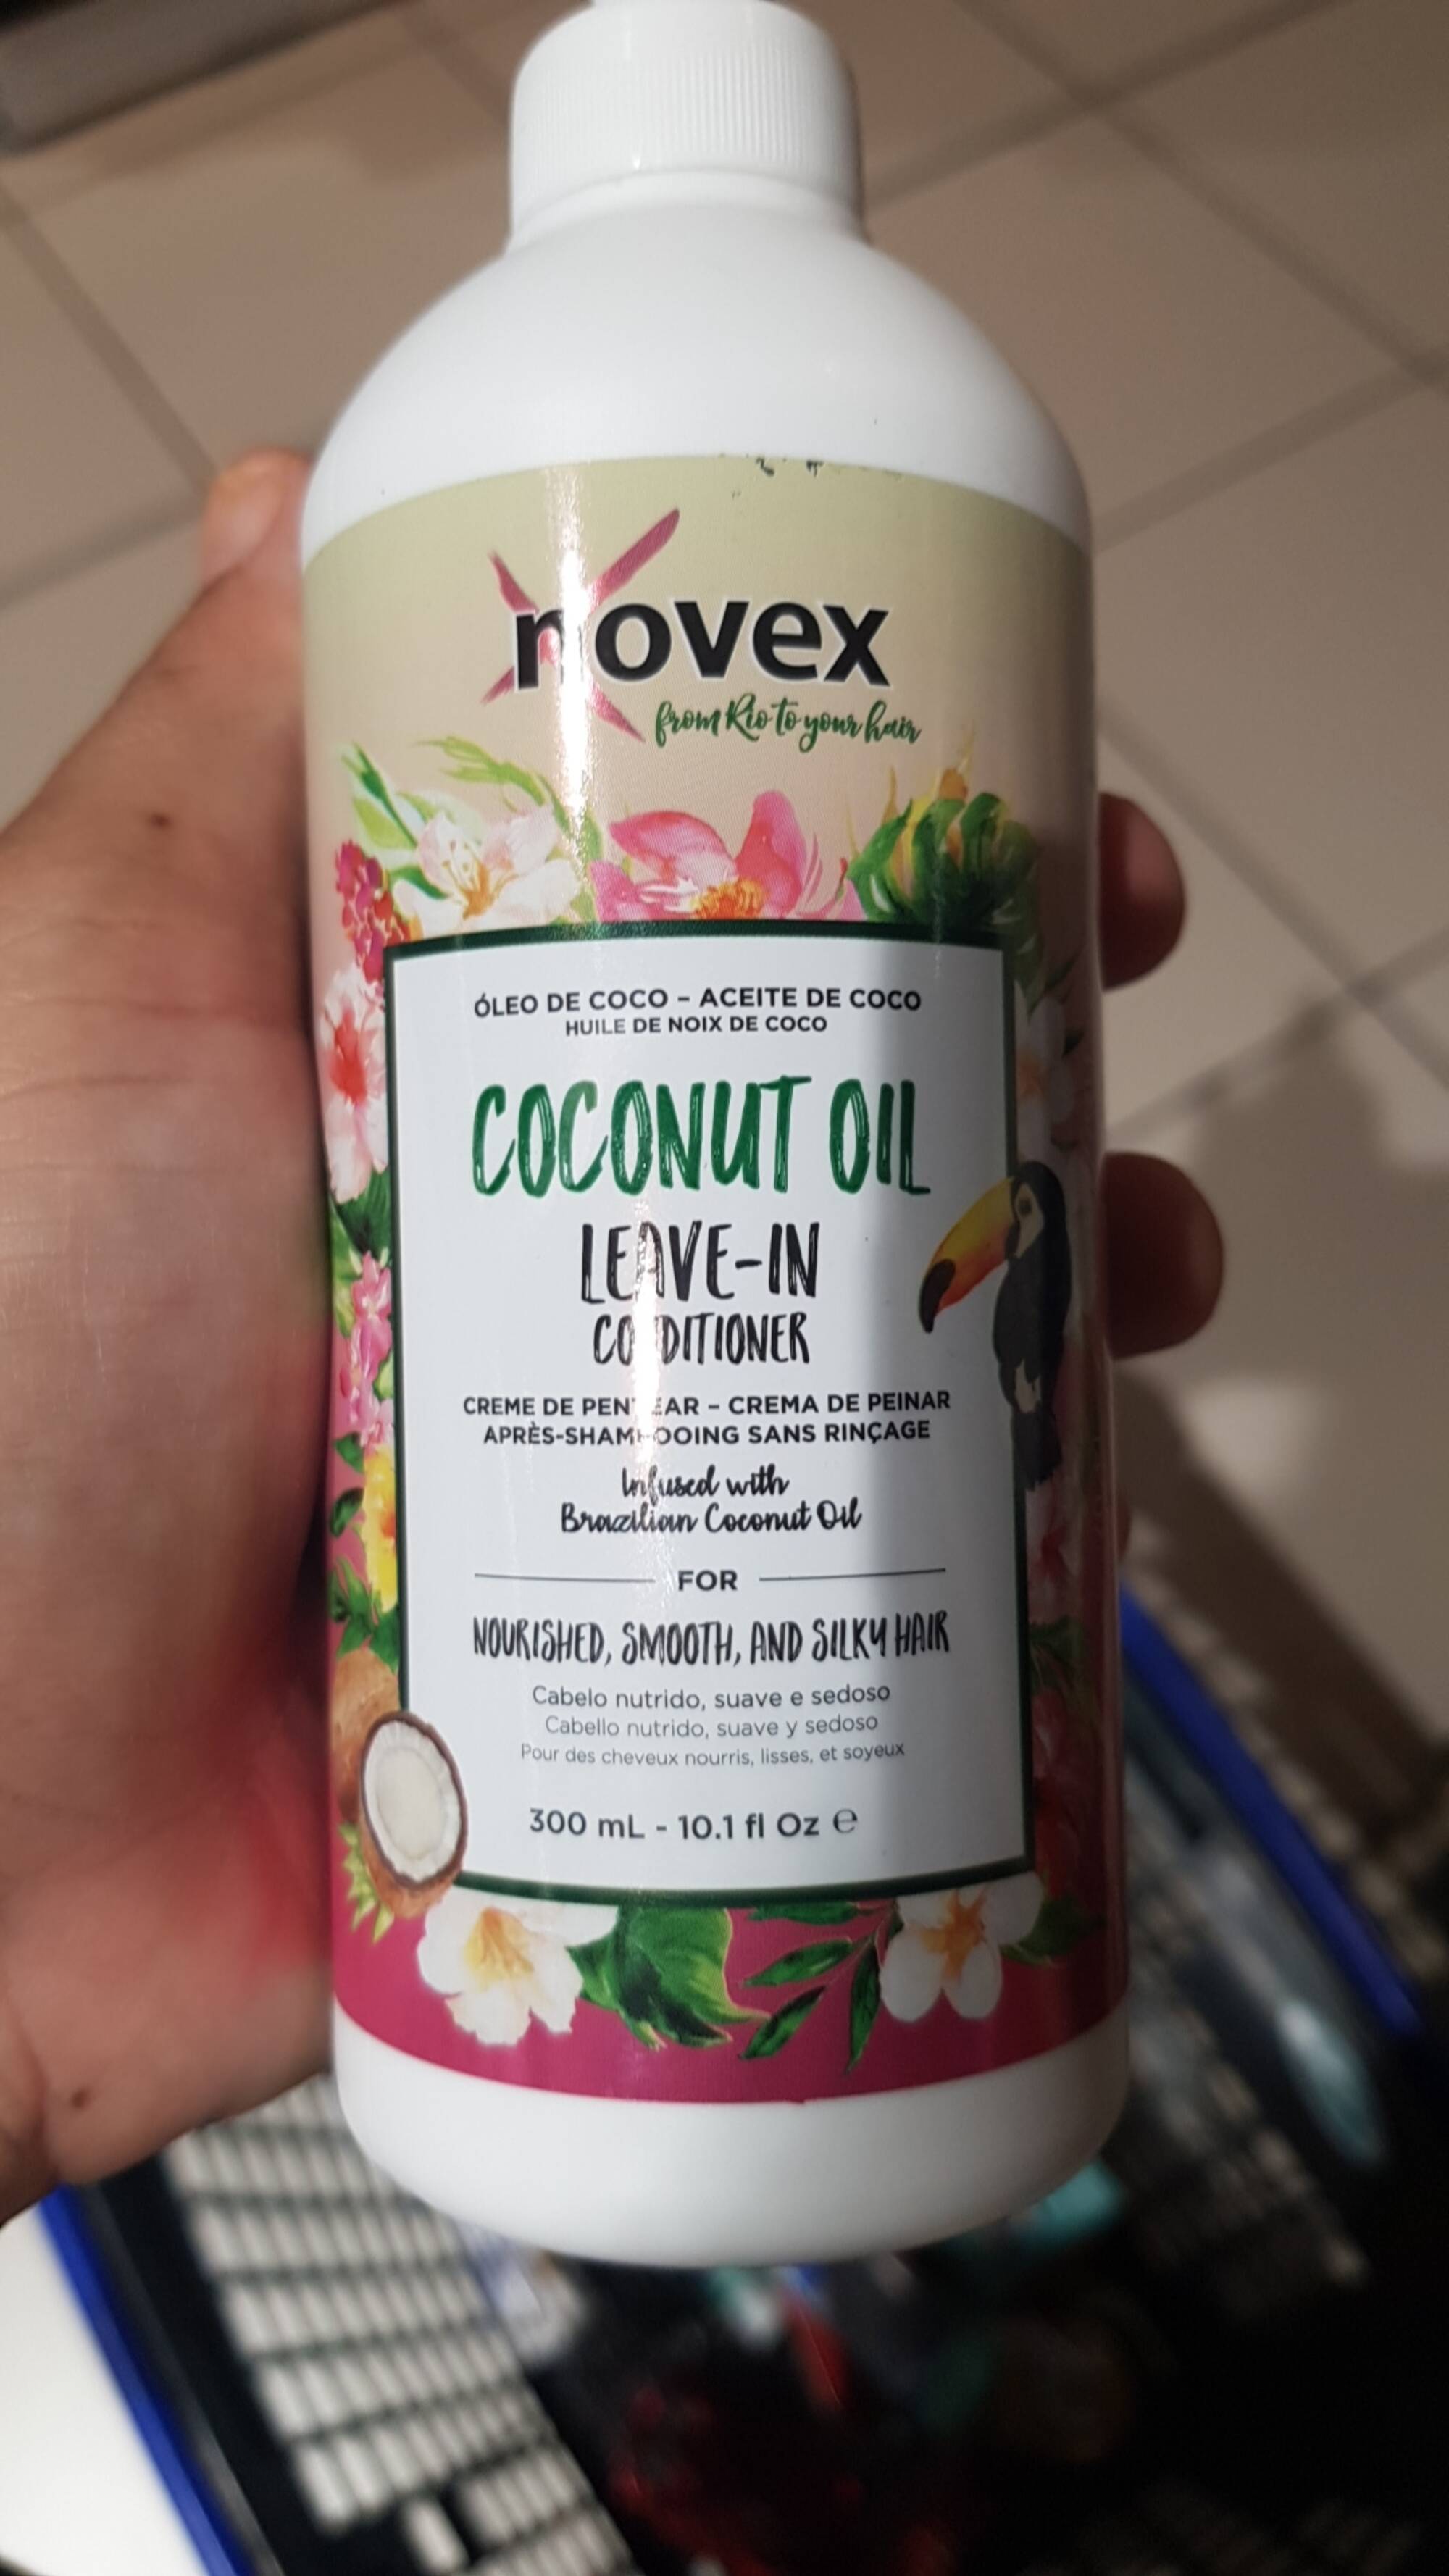 NOVEX - Coconut oil leave-in conditioner